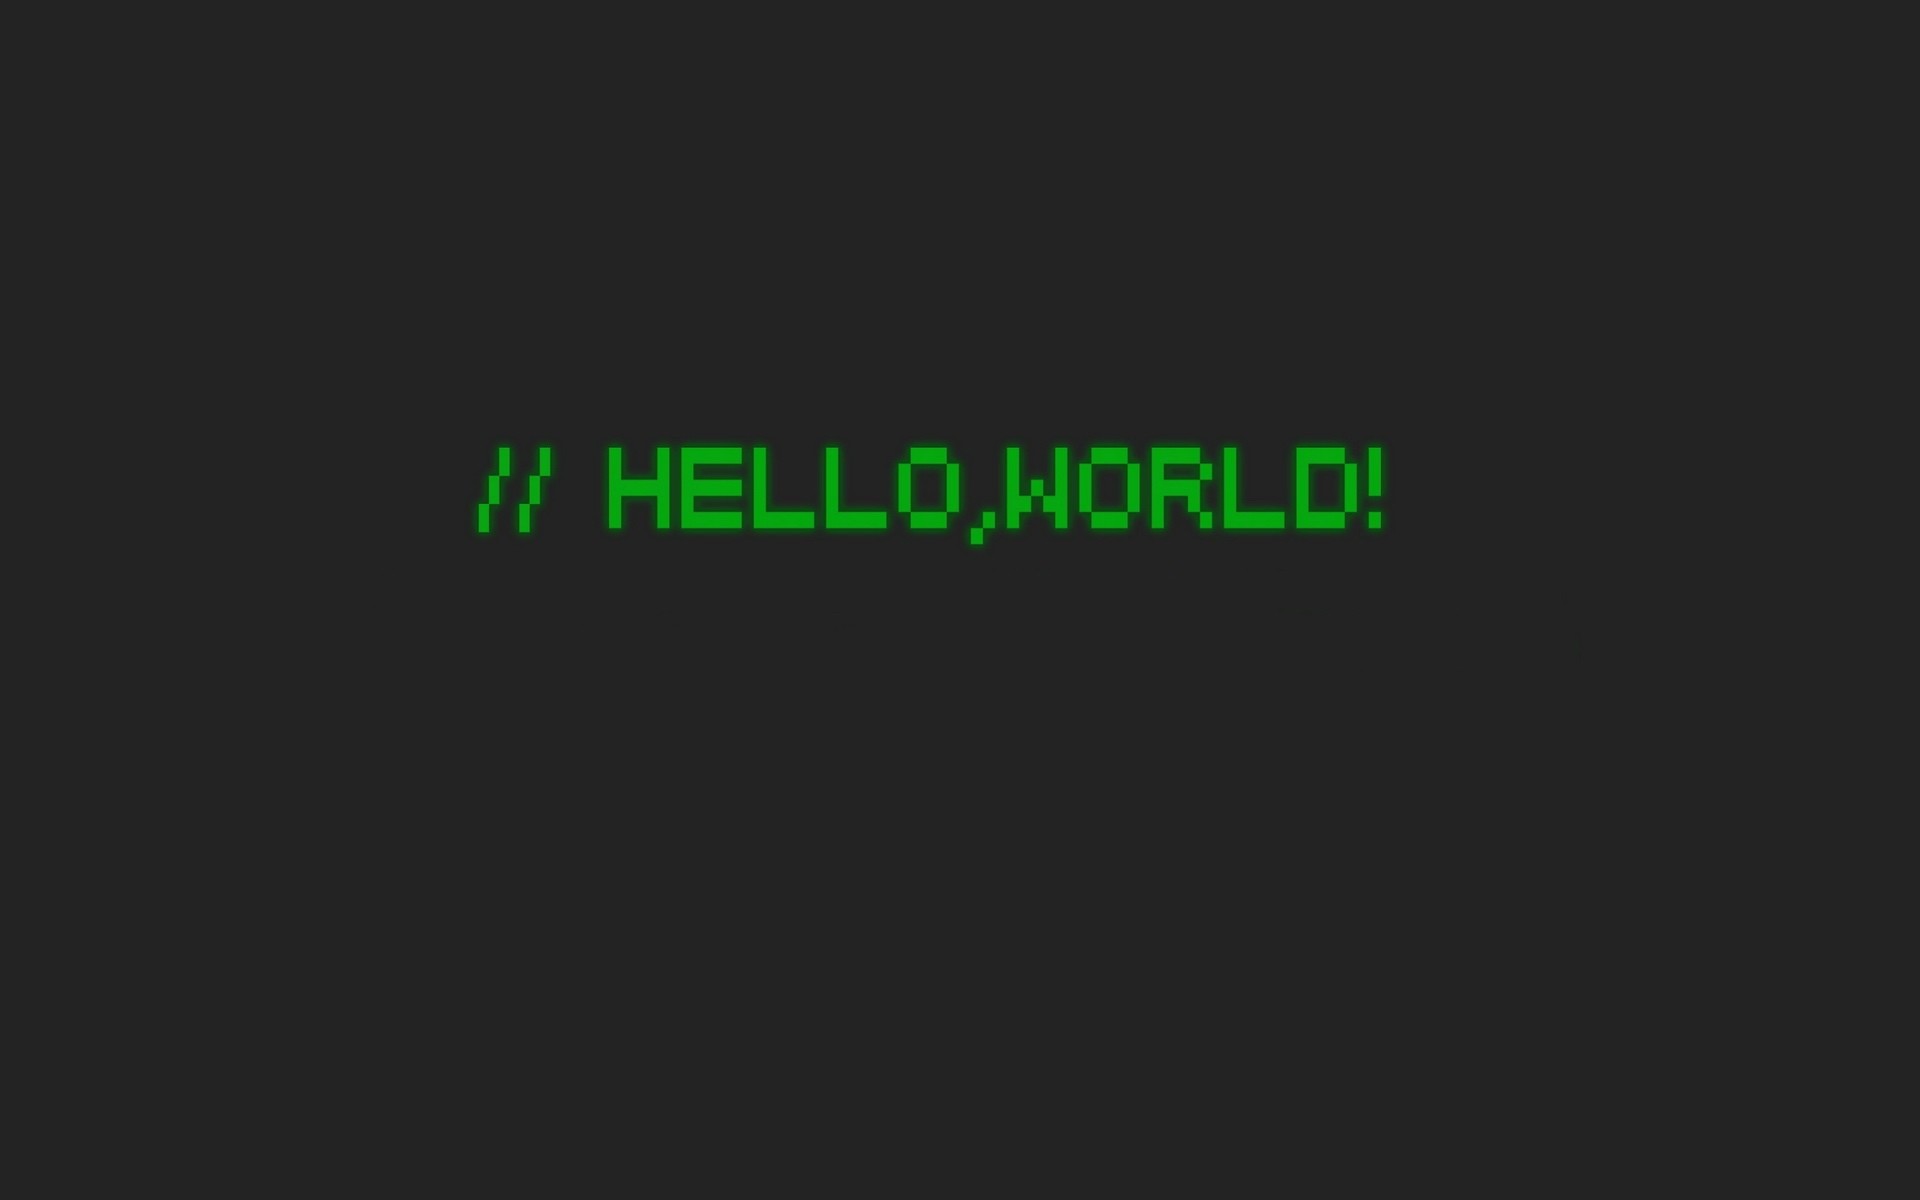 Simple Background Quote Minimalism Text World Hello World 8 Bit Pixelated Typography Black Backgroun 1920x1200